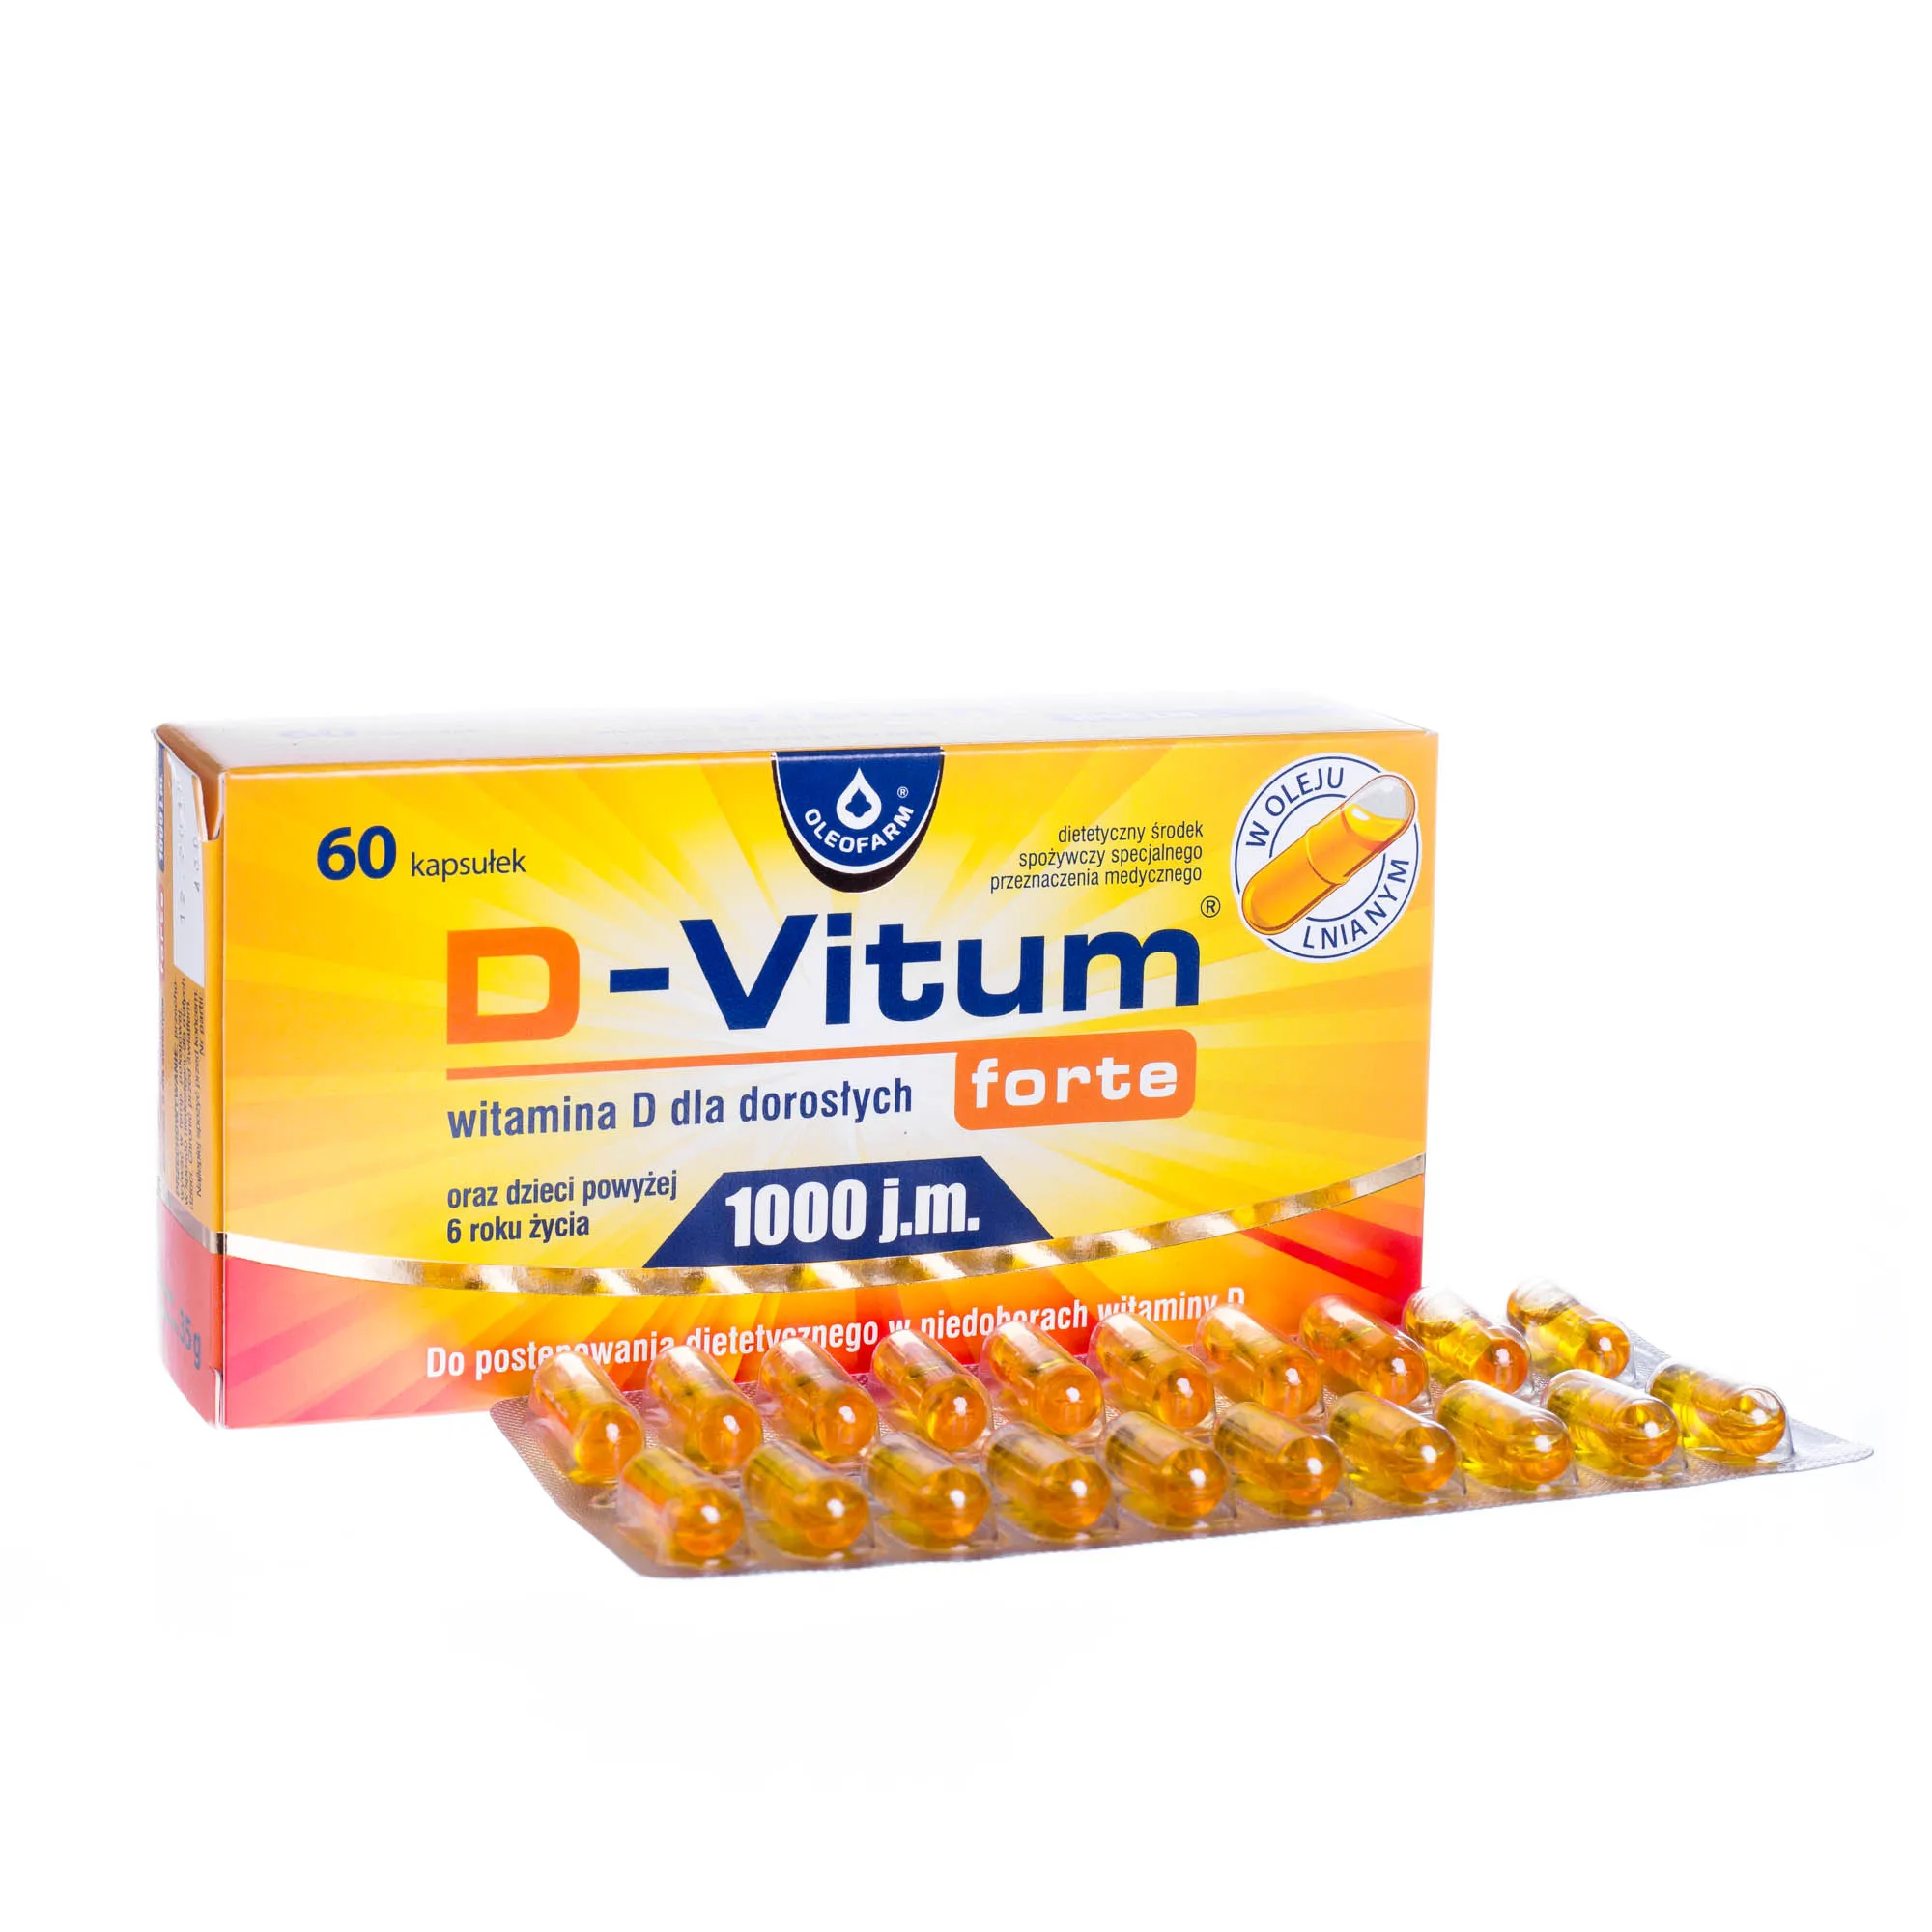 D-Vitum Forte 1000 j.m. - witamina D dla dorosłych, 60 kapsułek 